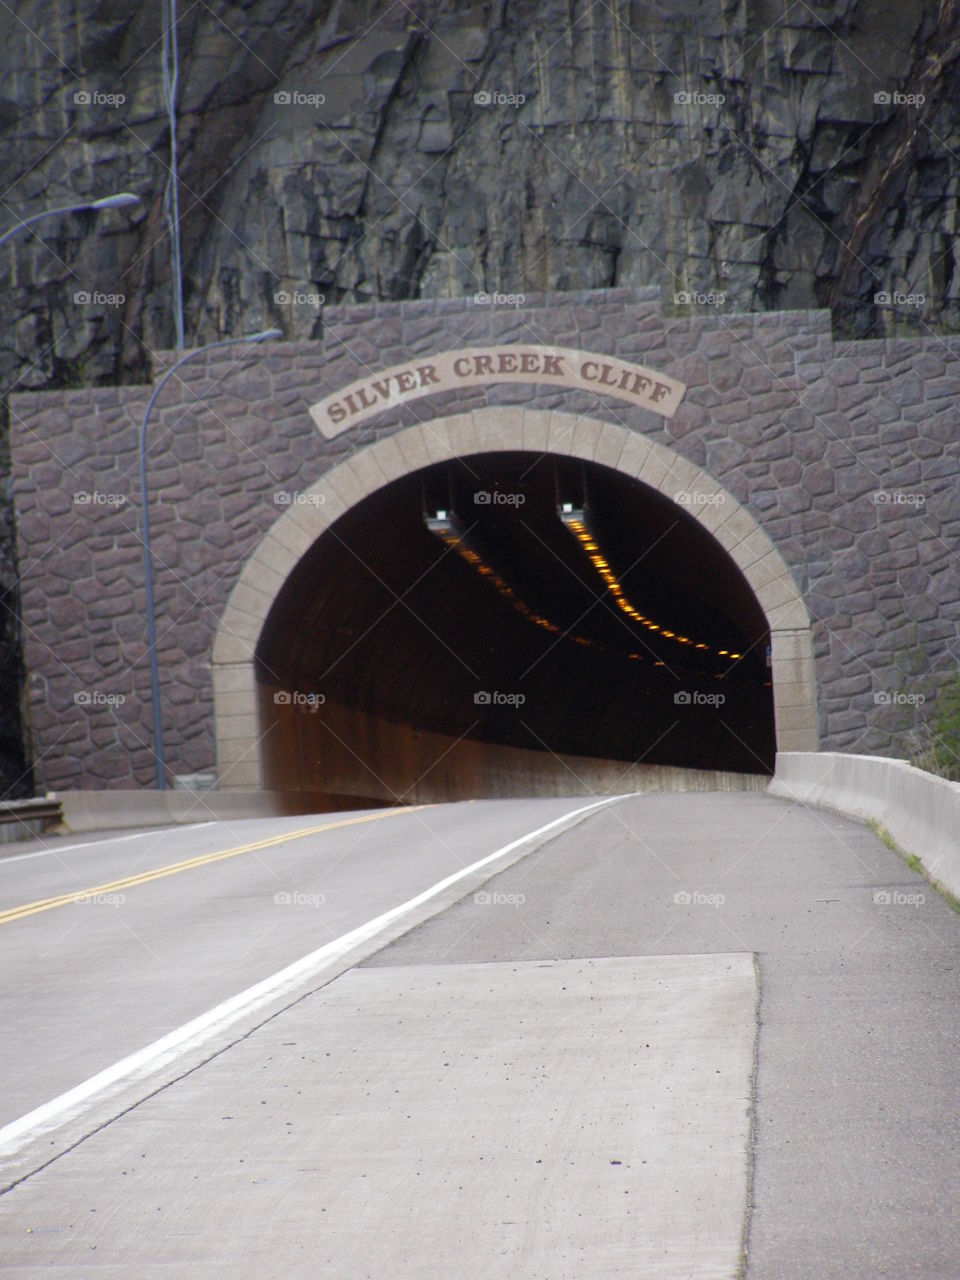 Silver Creek Cliff Tunnel #4